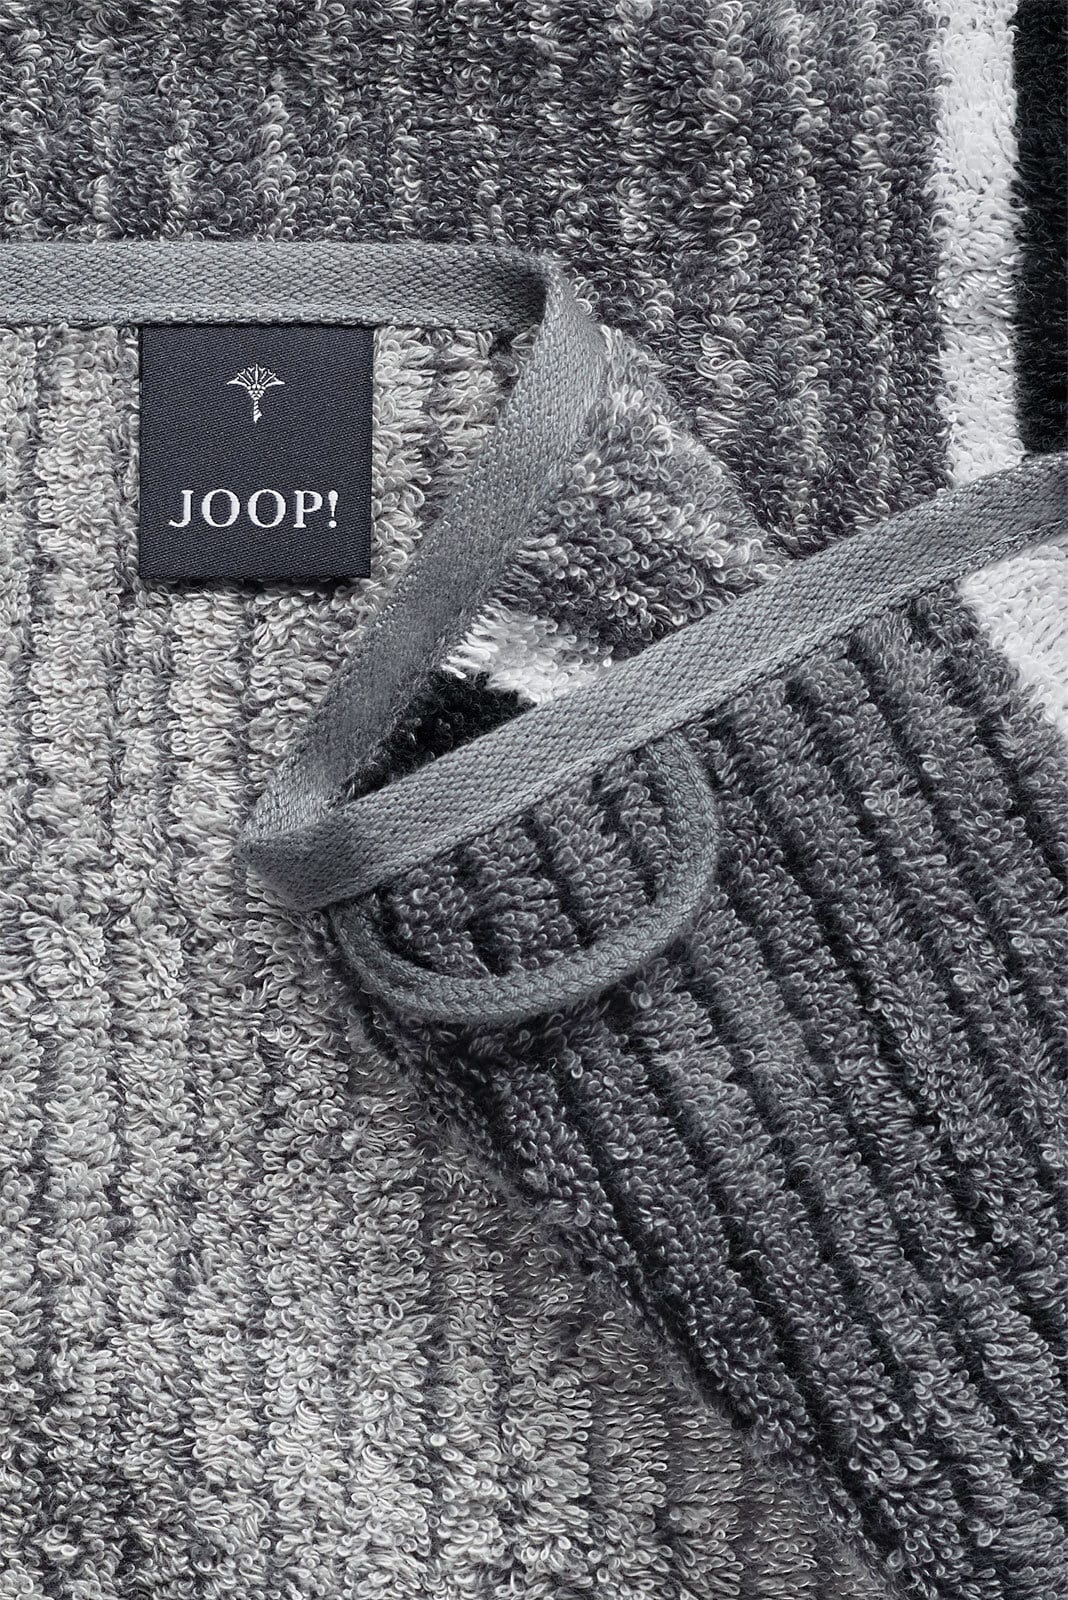 JOOP! Handtuch LINES 50 x 100 cm grau/schwarz